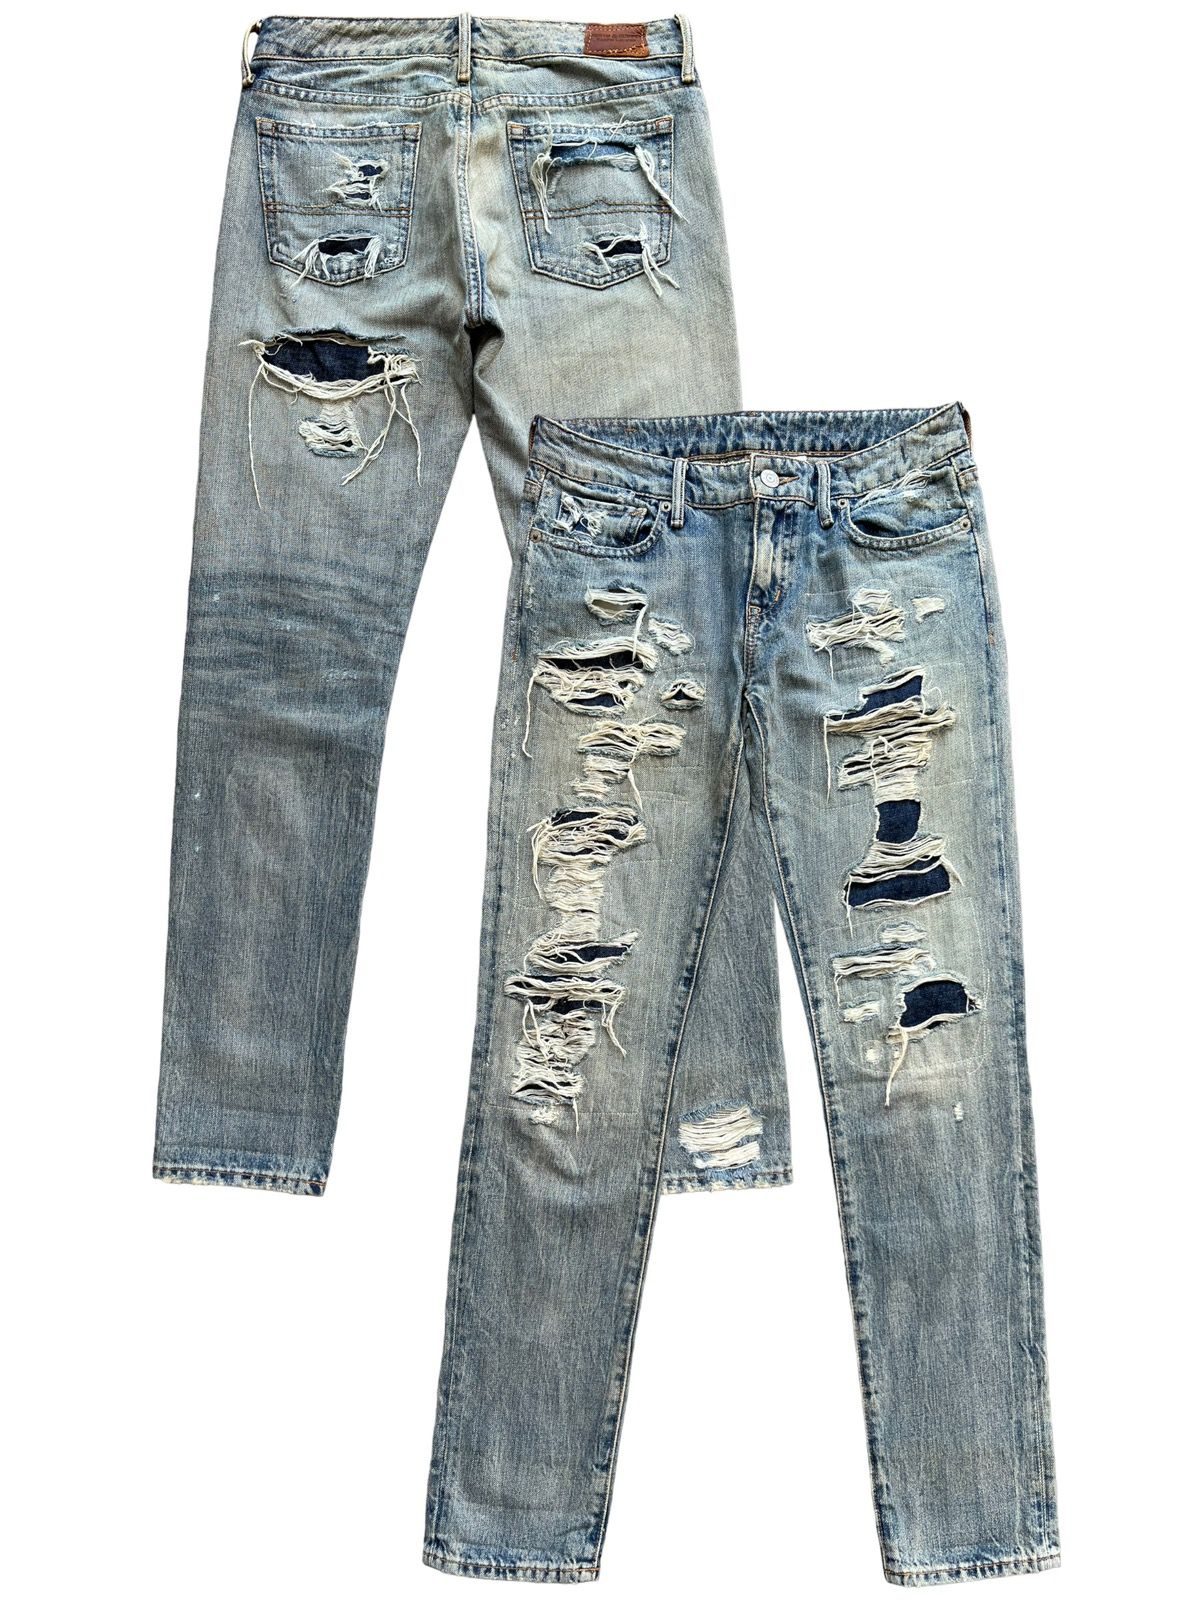 Ralph Lauren Rusty Ripped Distressed Denim Jeans 28x29 - 1